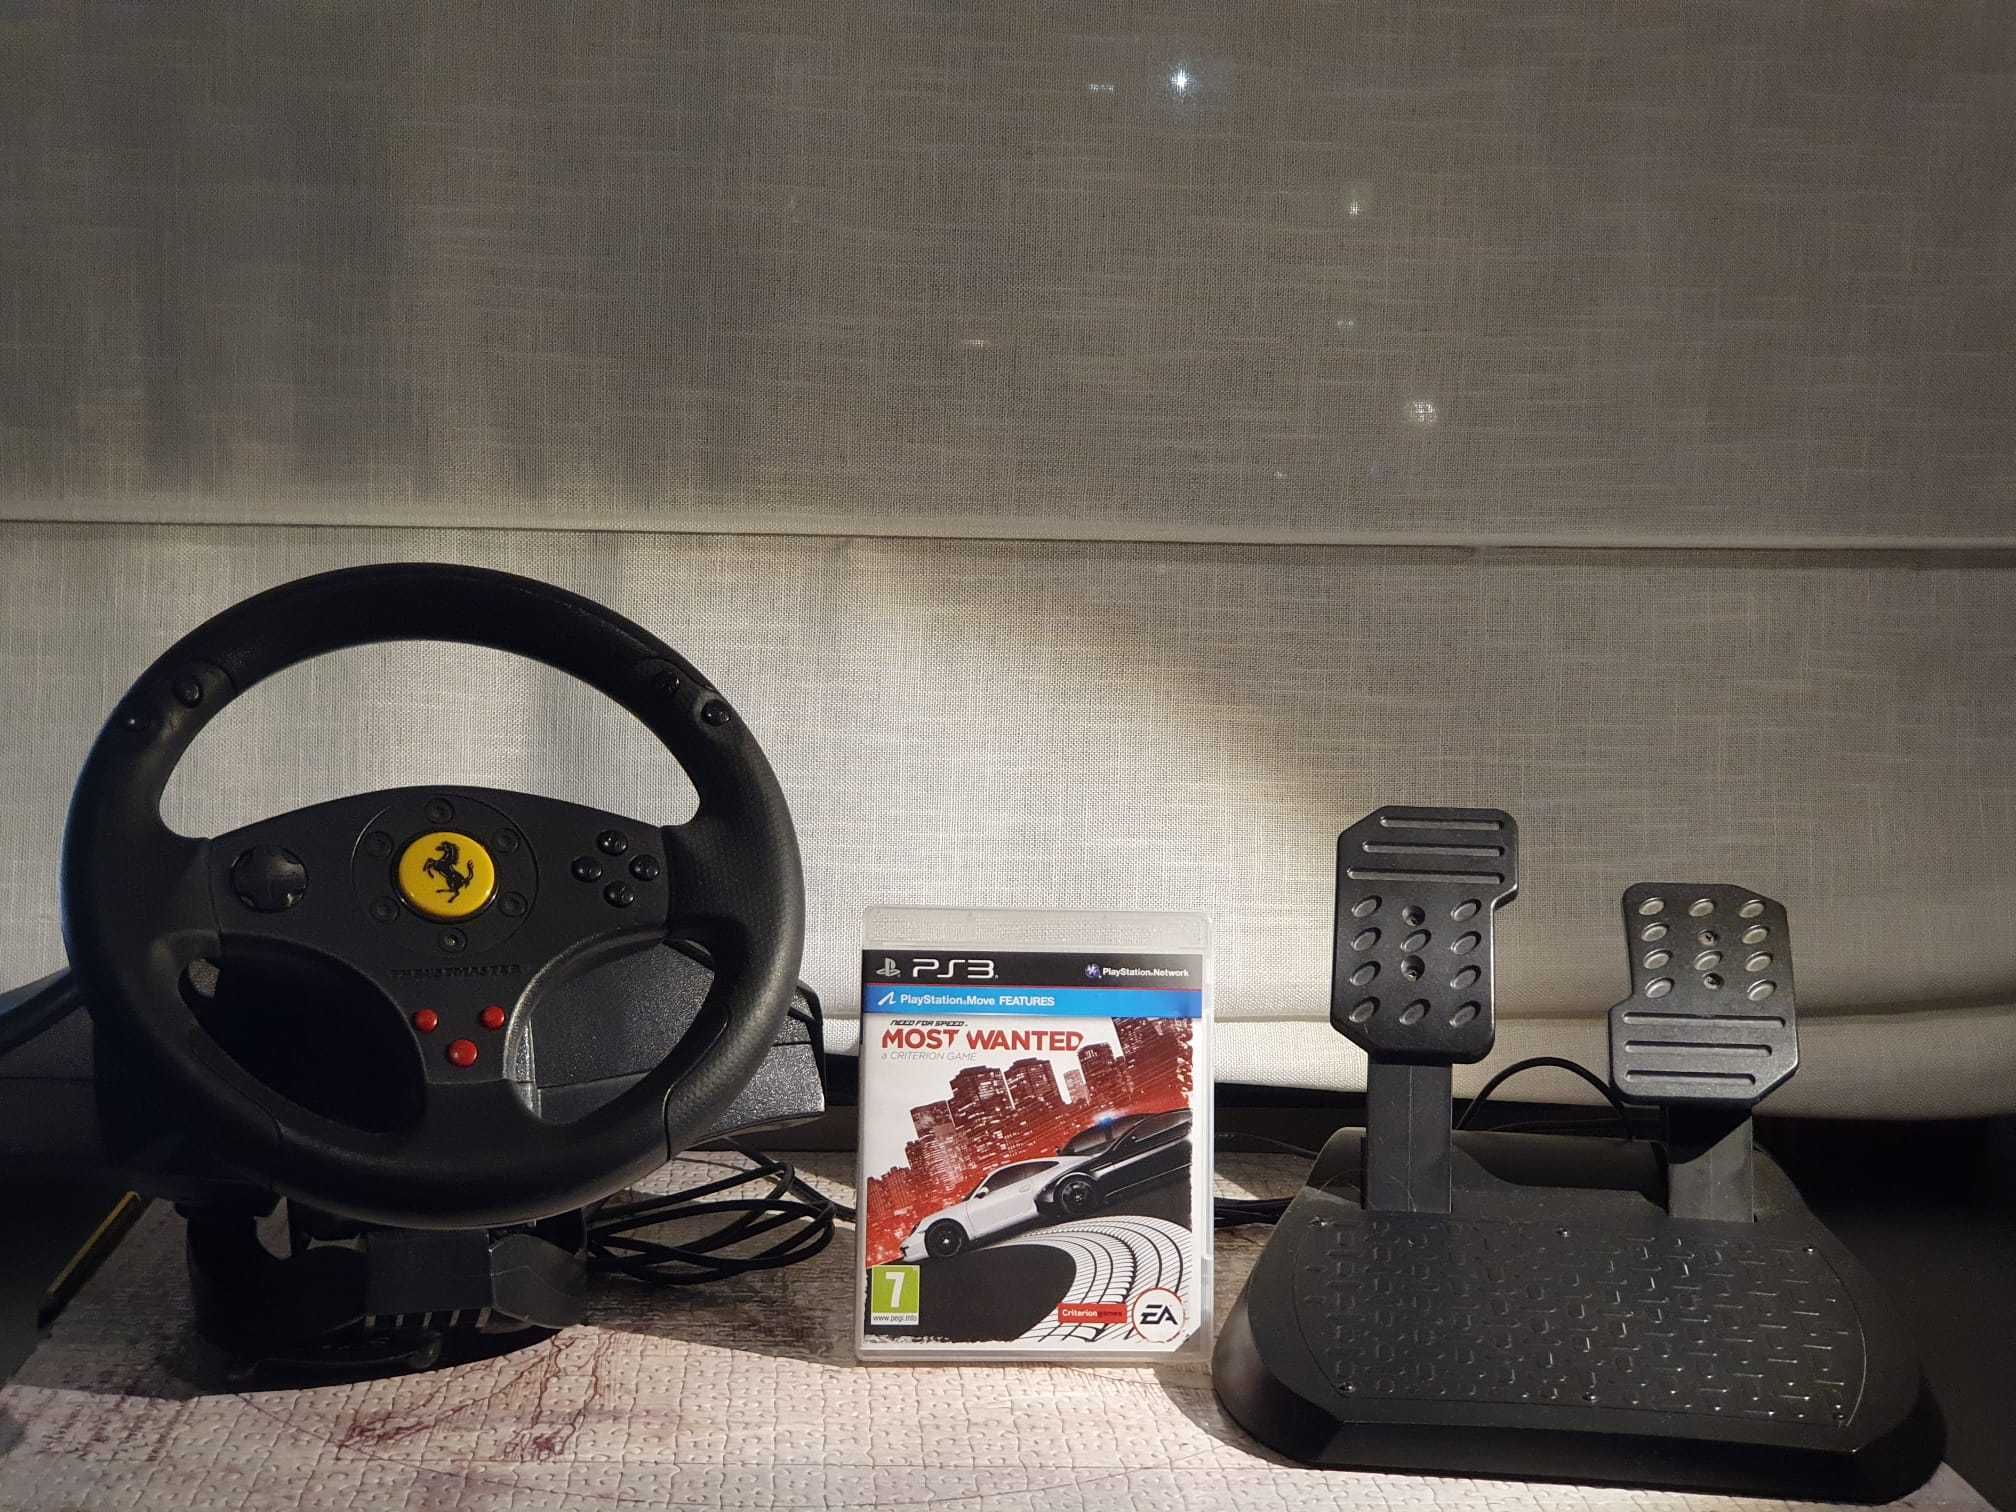 Volante + Pedais Thrustmaster Ferrari Edition - Xbox One / PC / PS3